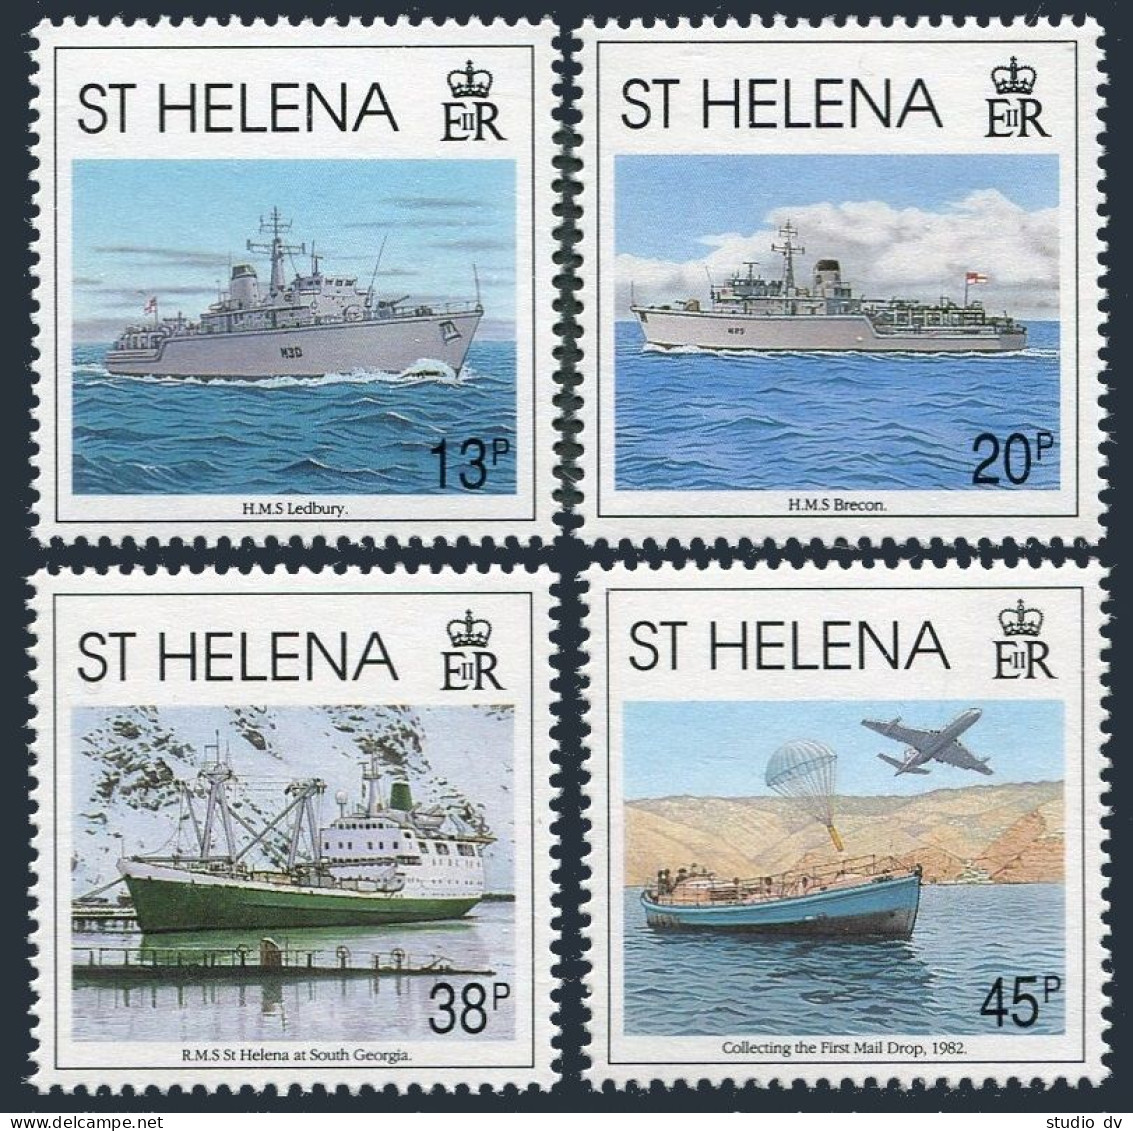 St Helena 575-578,MNH.Michel 576-579. Liberation Of Falkland,10th Ann.1992.Ships - Saint Helena Island